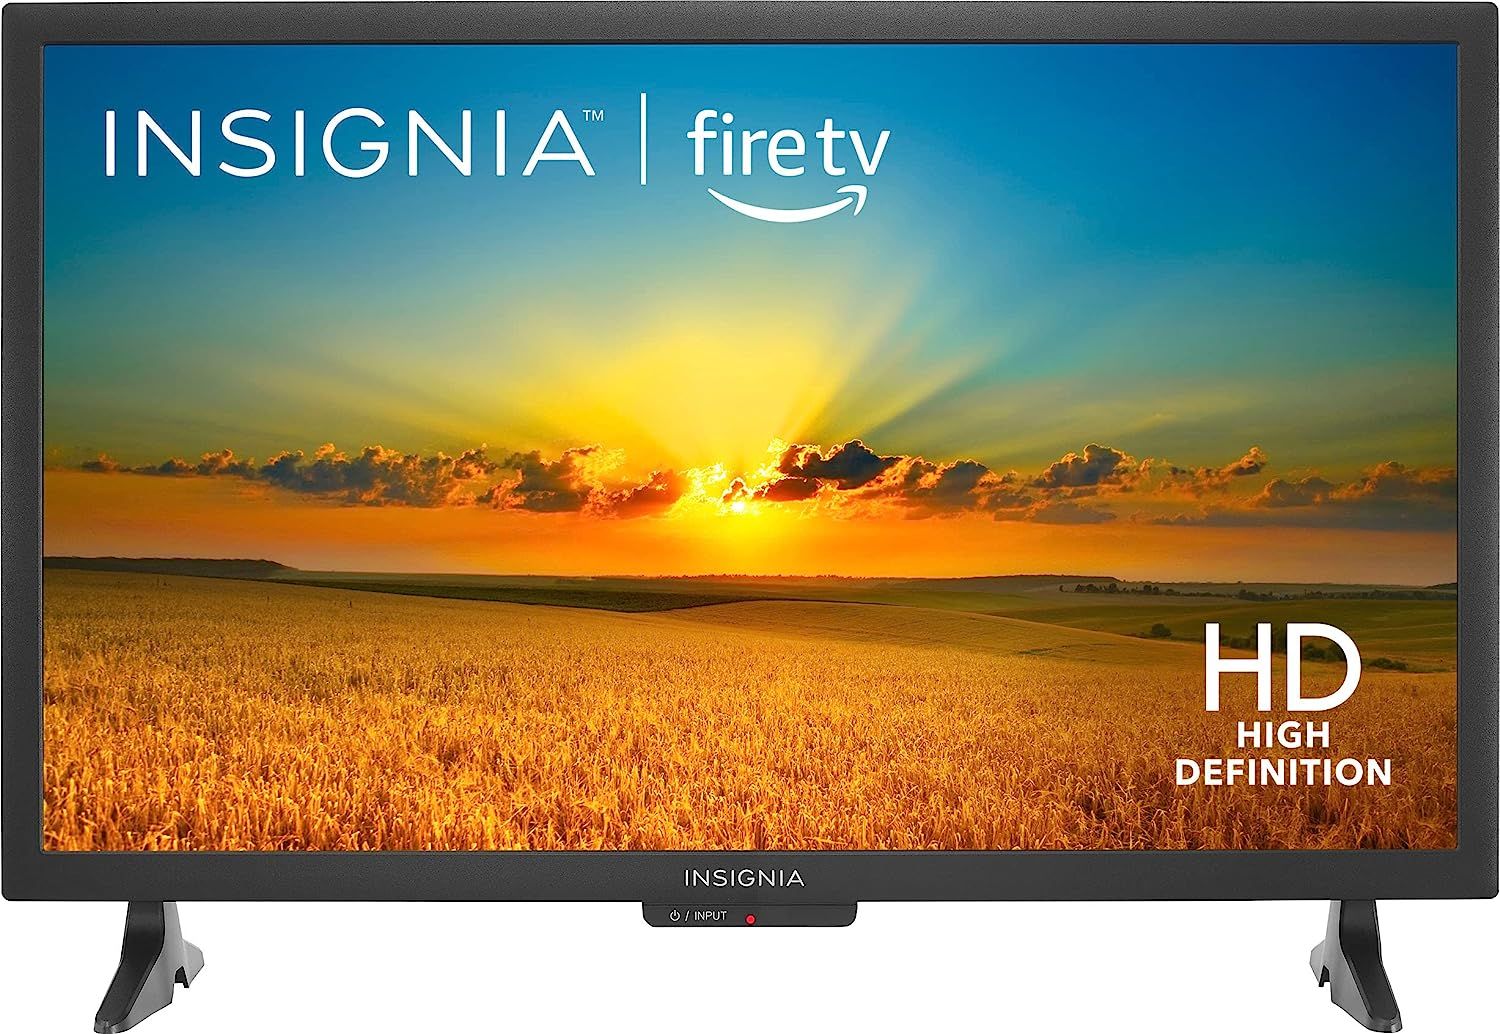 TELEVISOR TOSHIBA, 32 PULGADAS, HD SMART FIRE TV, LED, 3 HDMI + 1